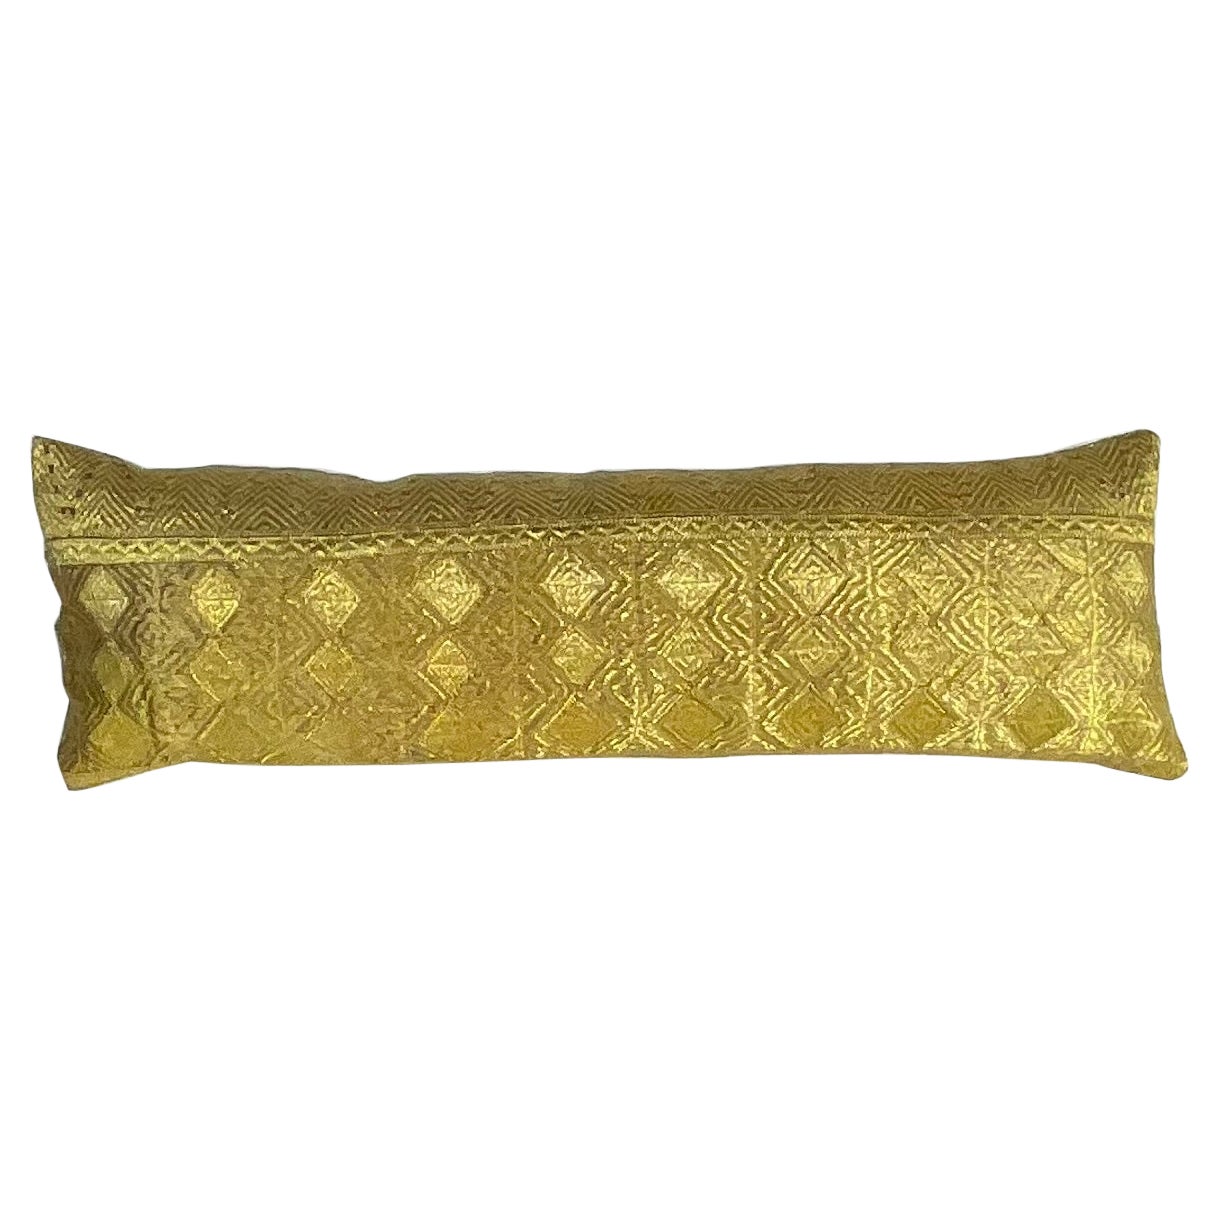 Single Antique Embroidery Textile Pillow